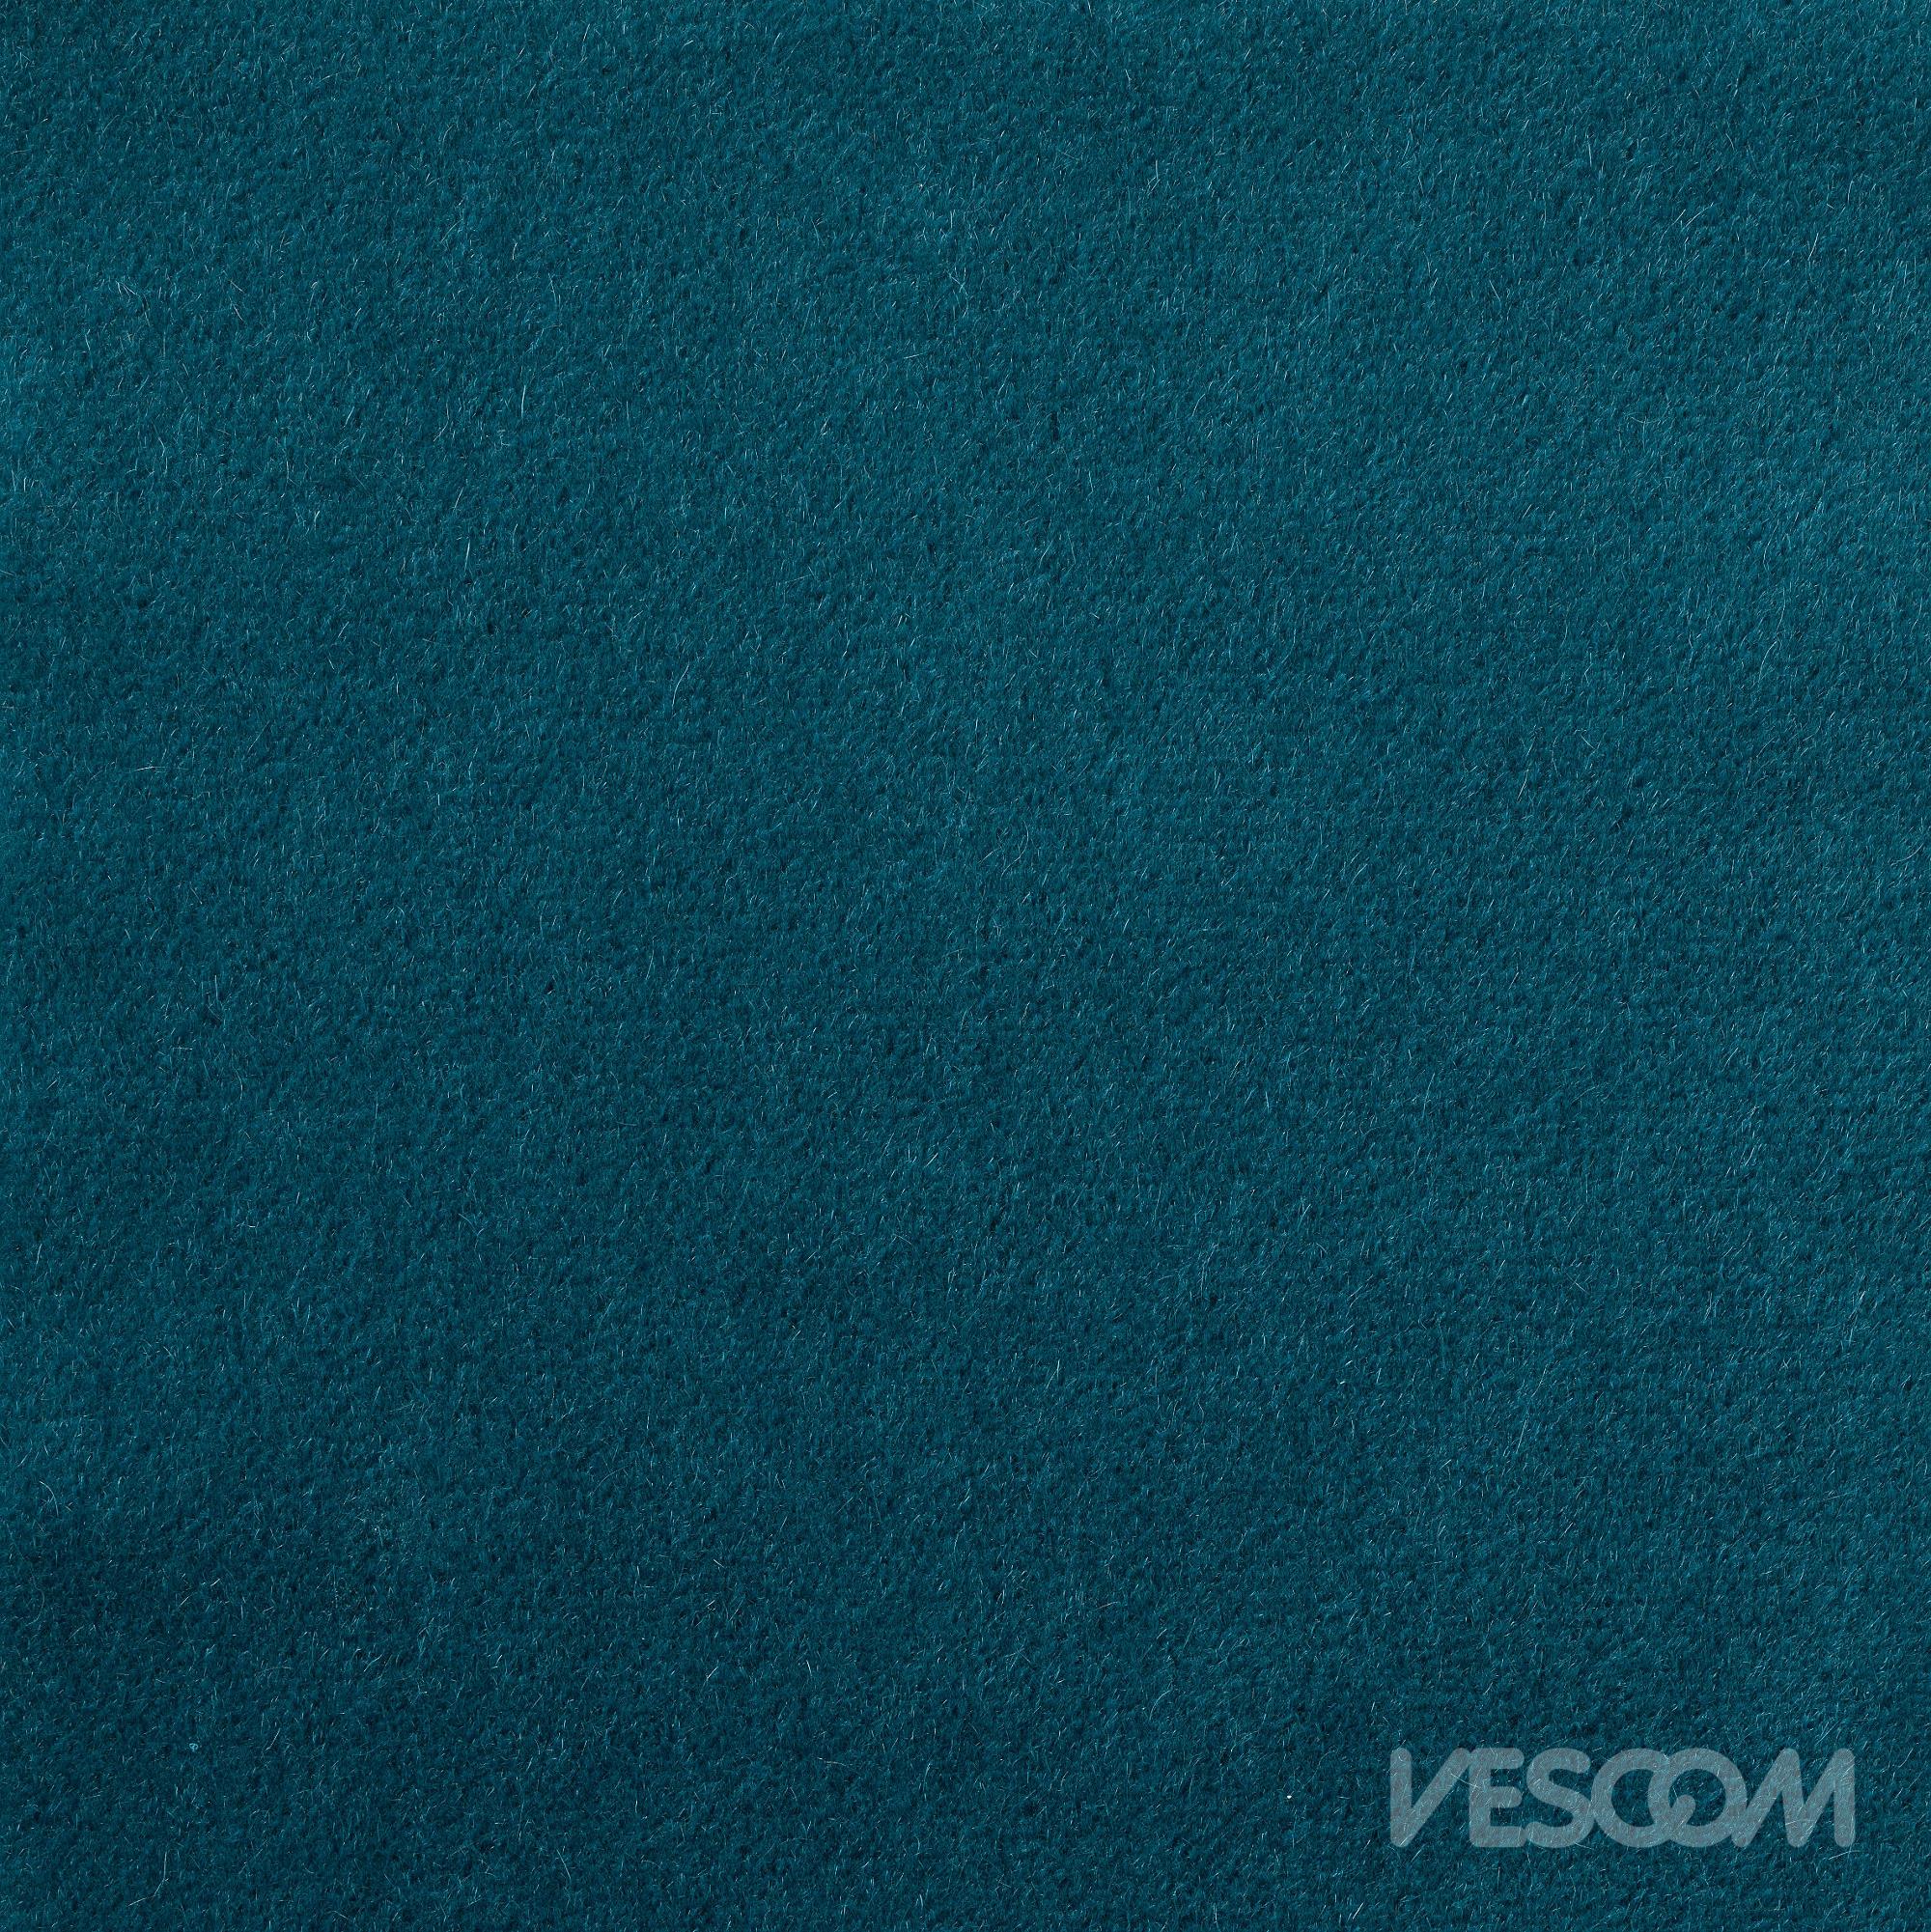 Vescom Ariana Upholstery Fabric 7061.01